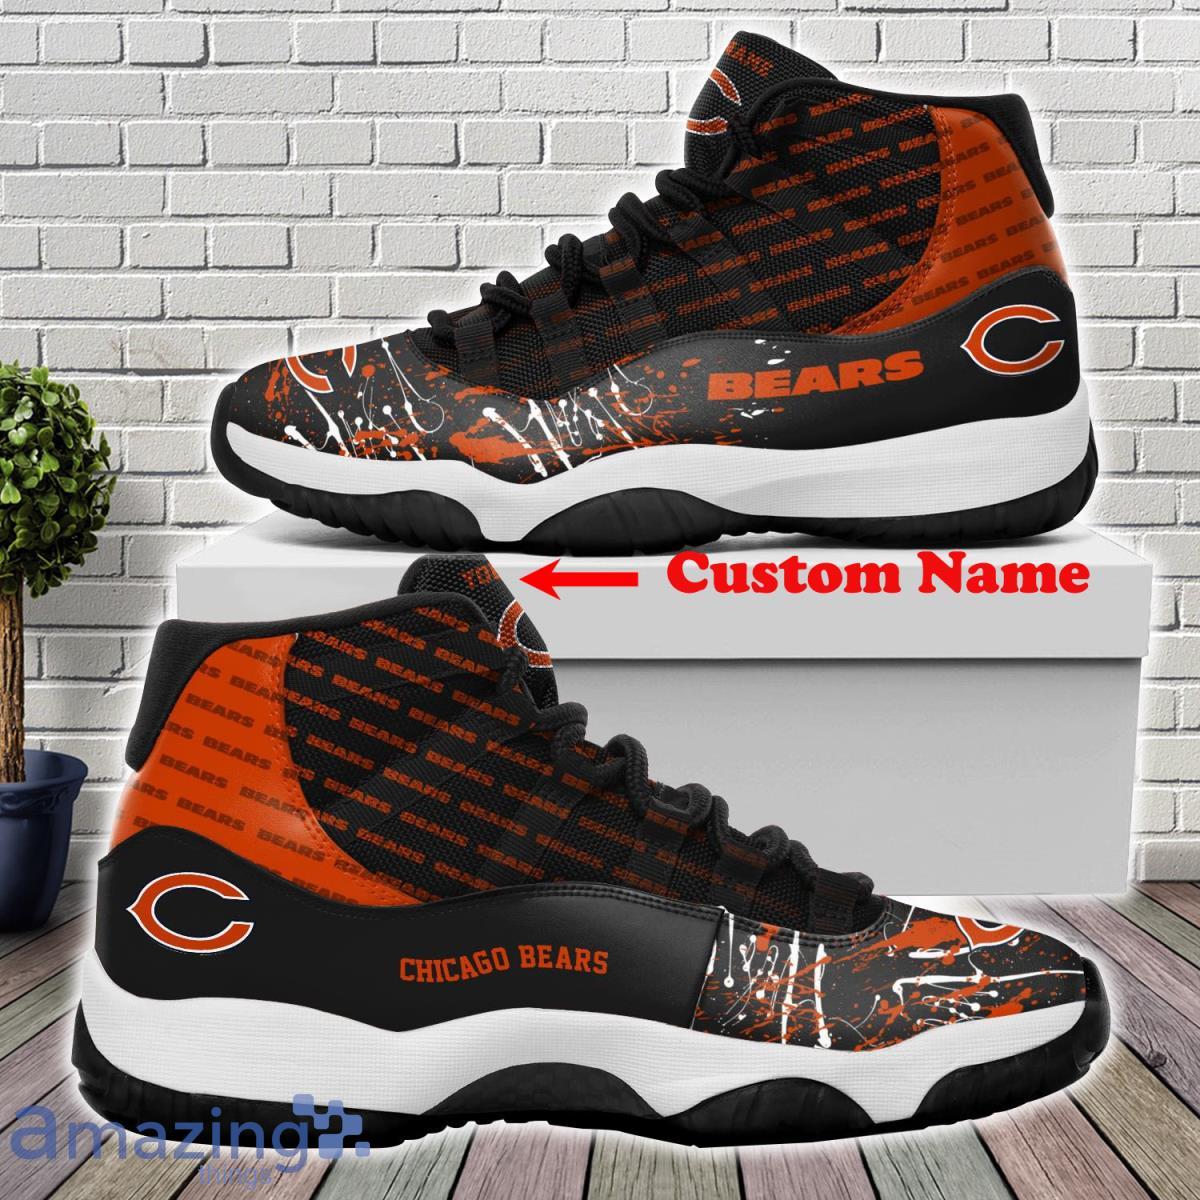 Chicago Bears Football Team Air Jordan 11 Custom Name Sneakers For Fans Product Photo 1